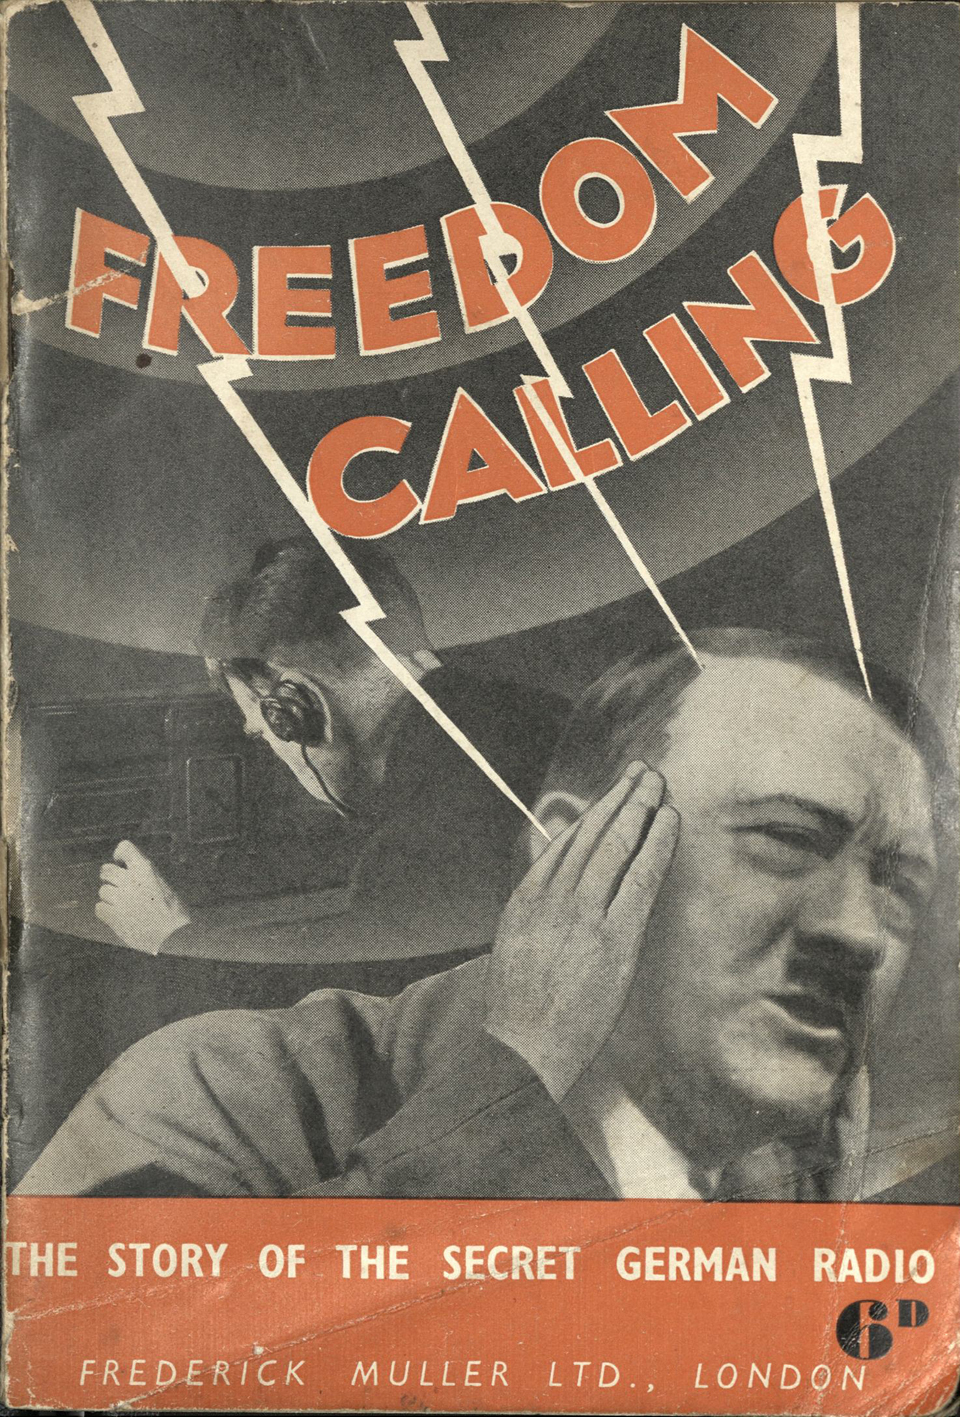 Broschüre "Freedom Calling! The Story of the Secret German Radio", 1939